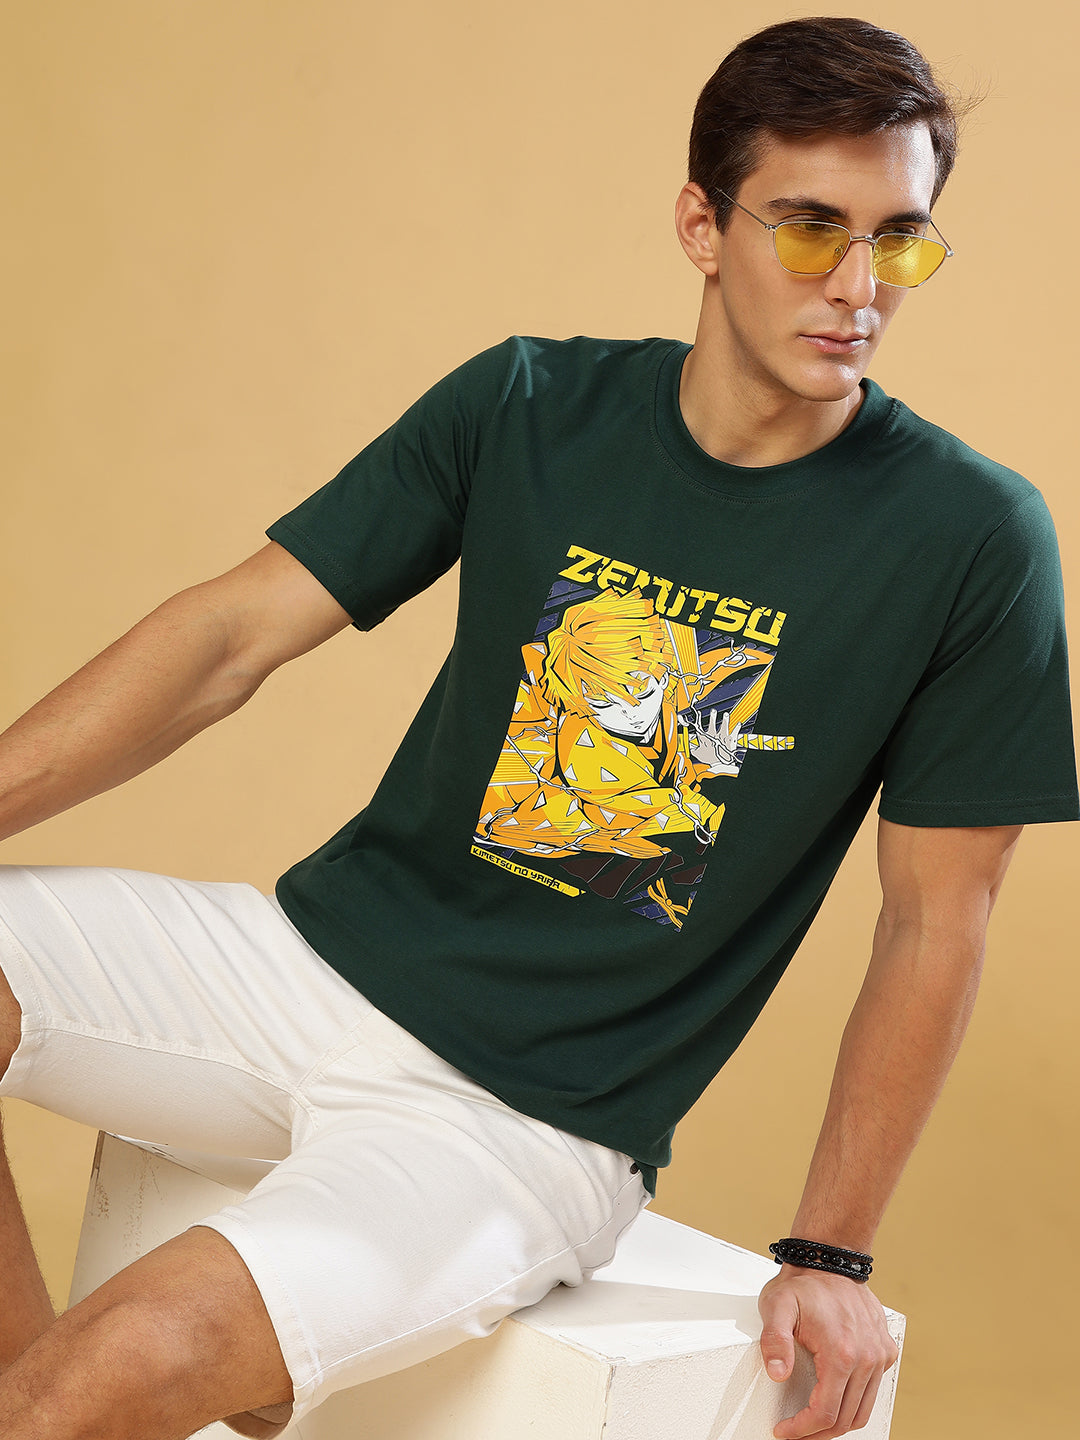 Zentusa Dark Green Regular T-Shirts